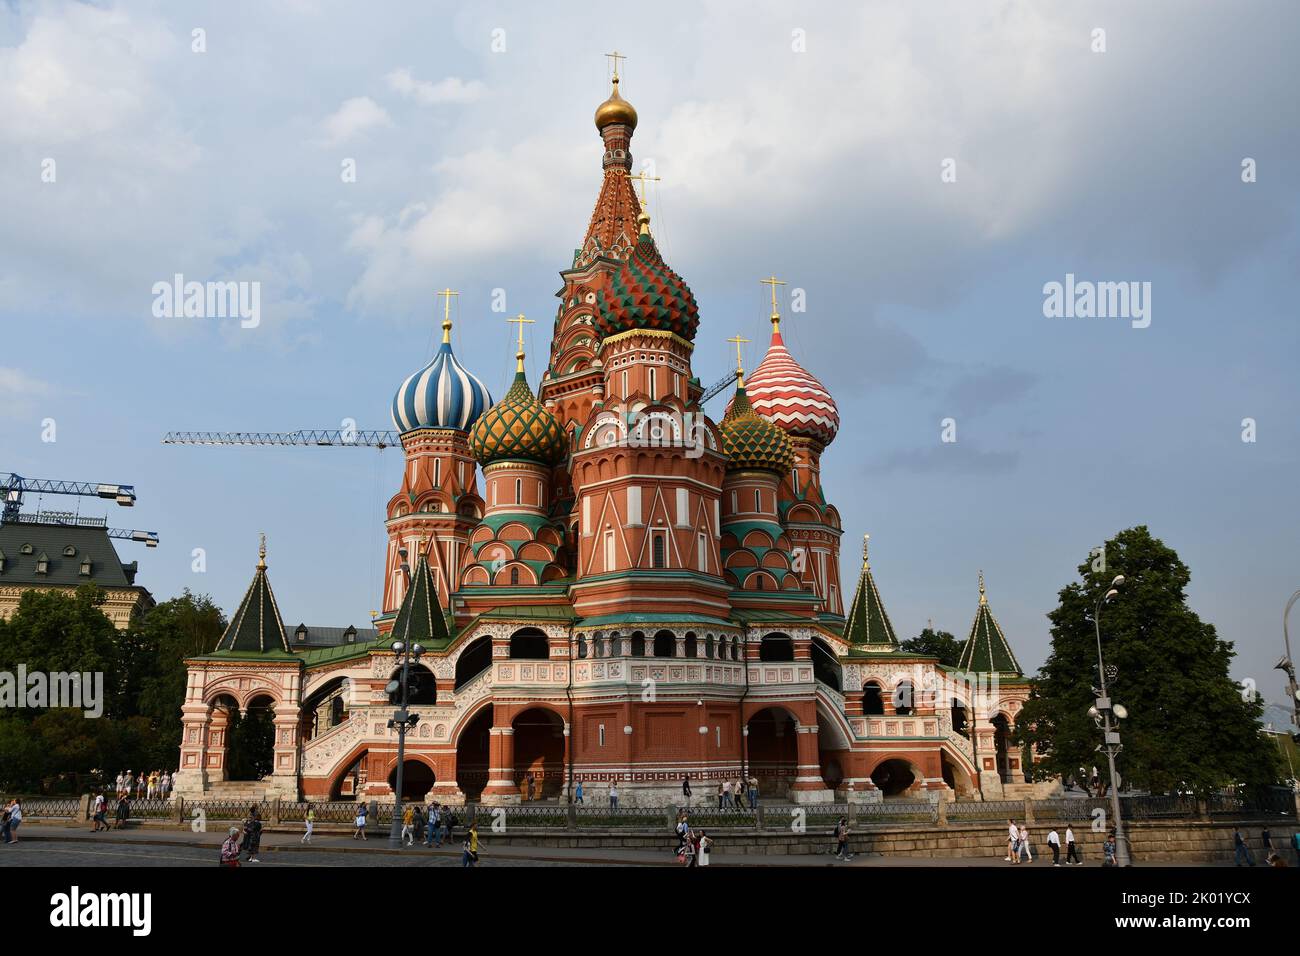 Die weltberühmte, ikonische Basilius-Kathedrale in Moskau, Russland Stockfoto